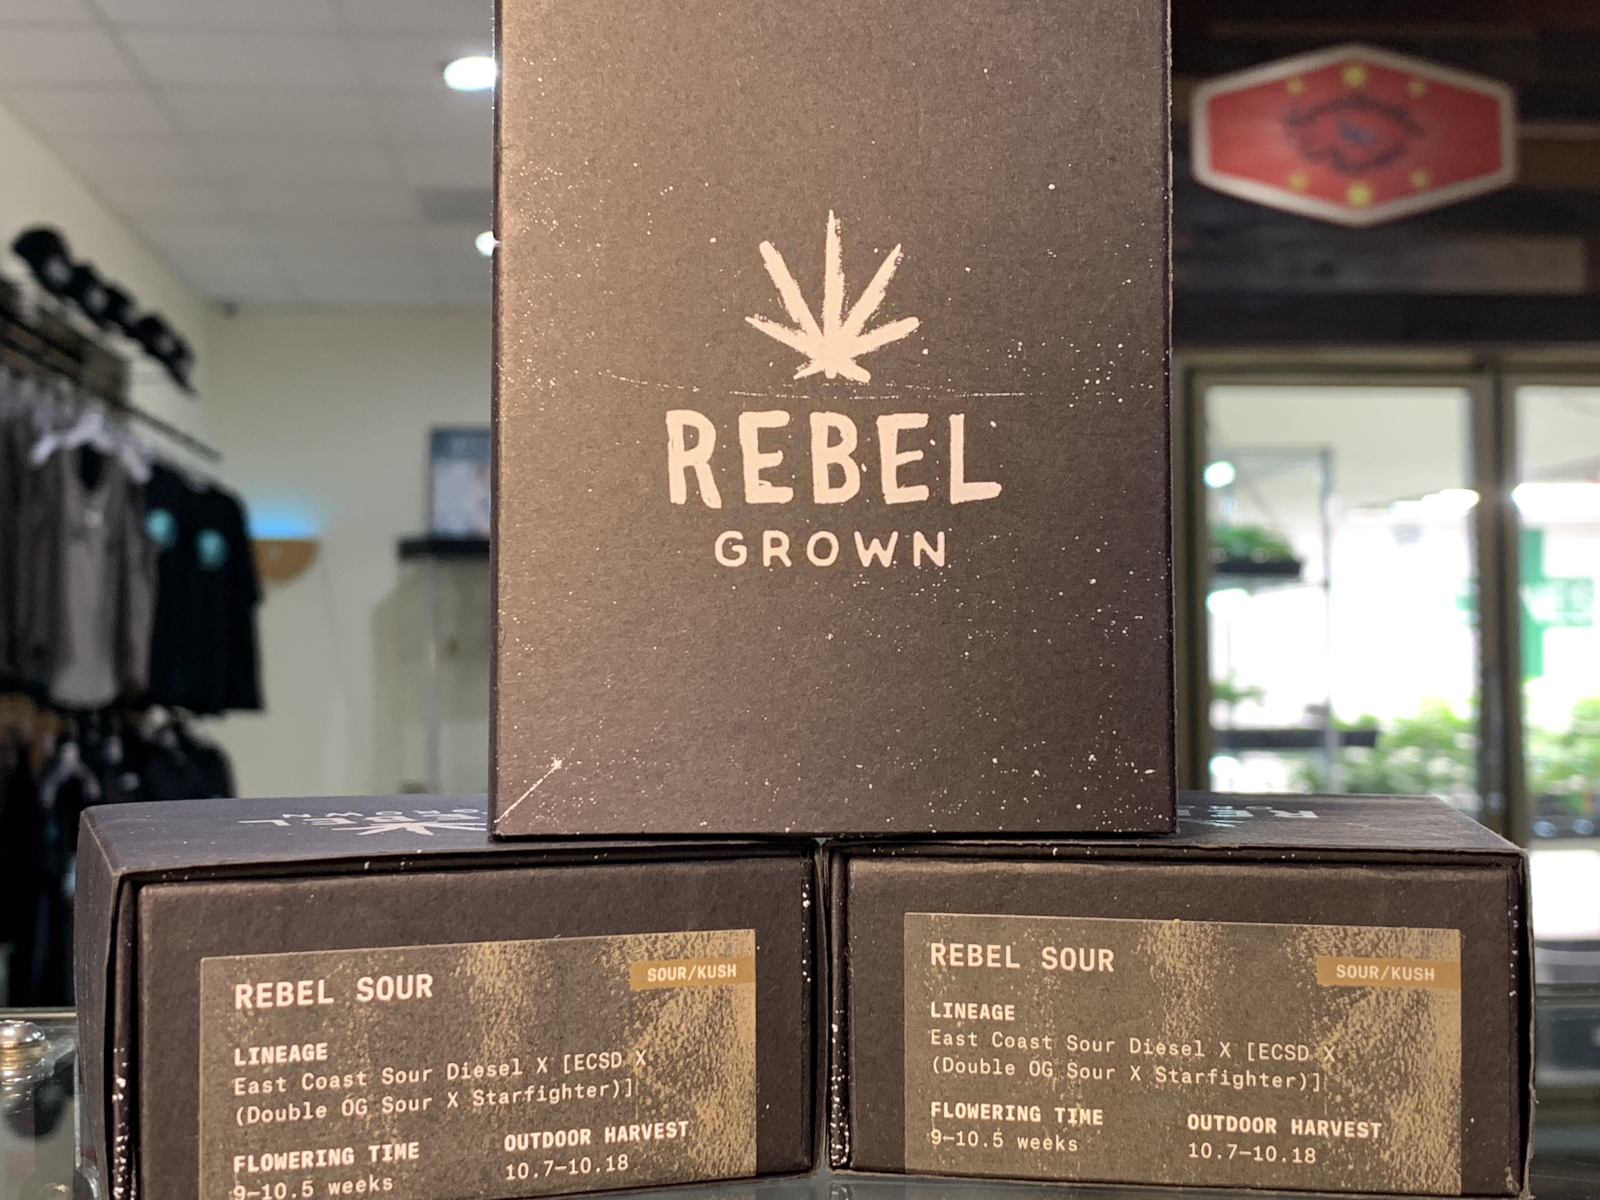 Rebel grown rebel sour seeds